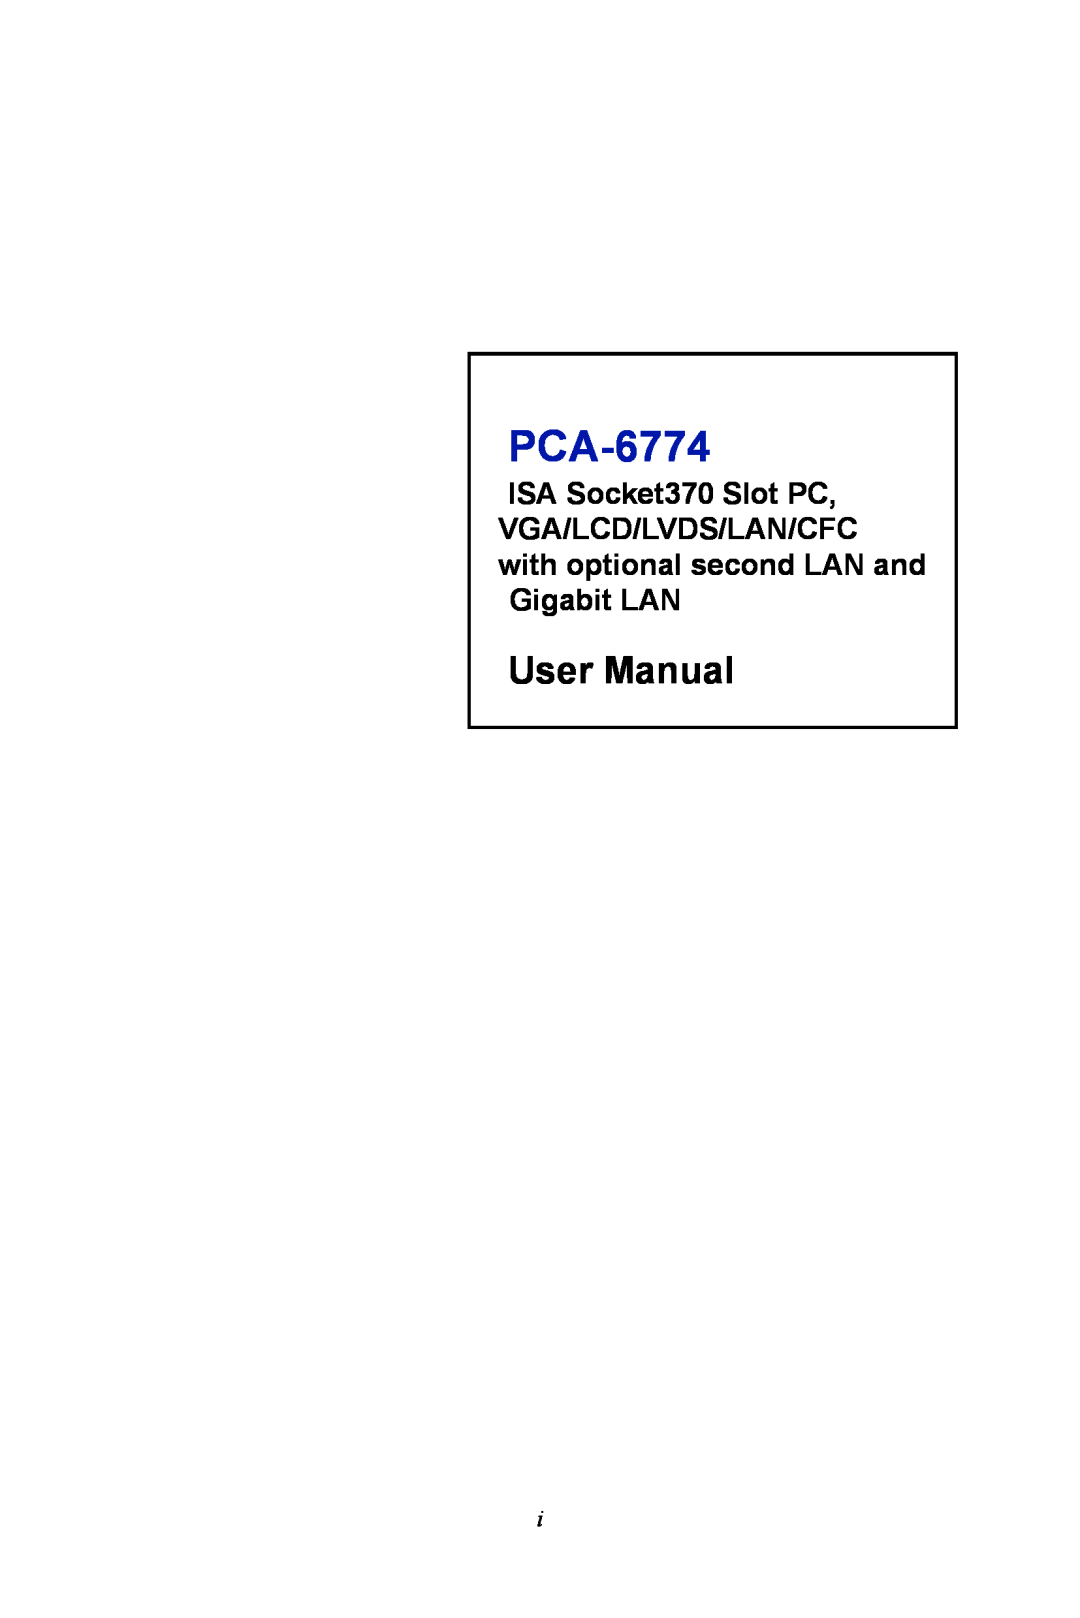 Advantech PCA-6774 user manual User Manual 